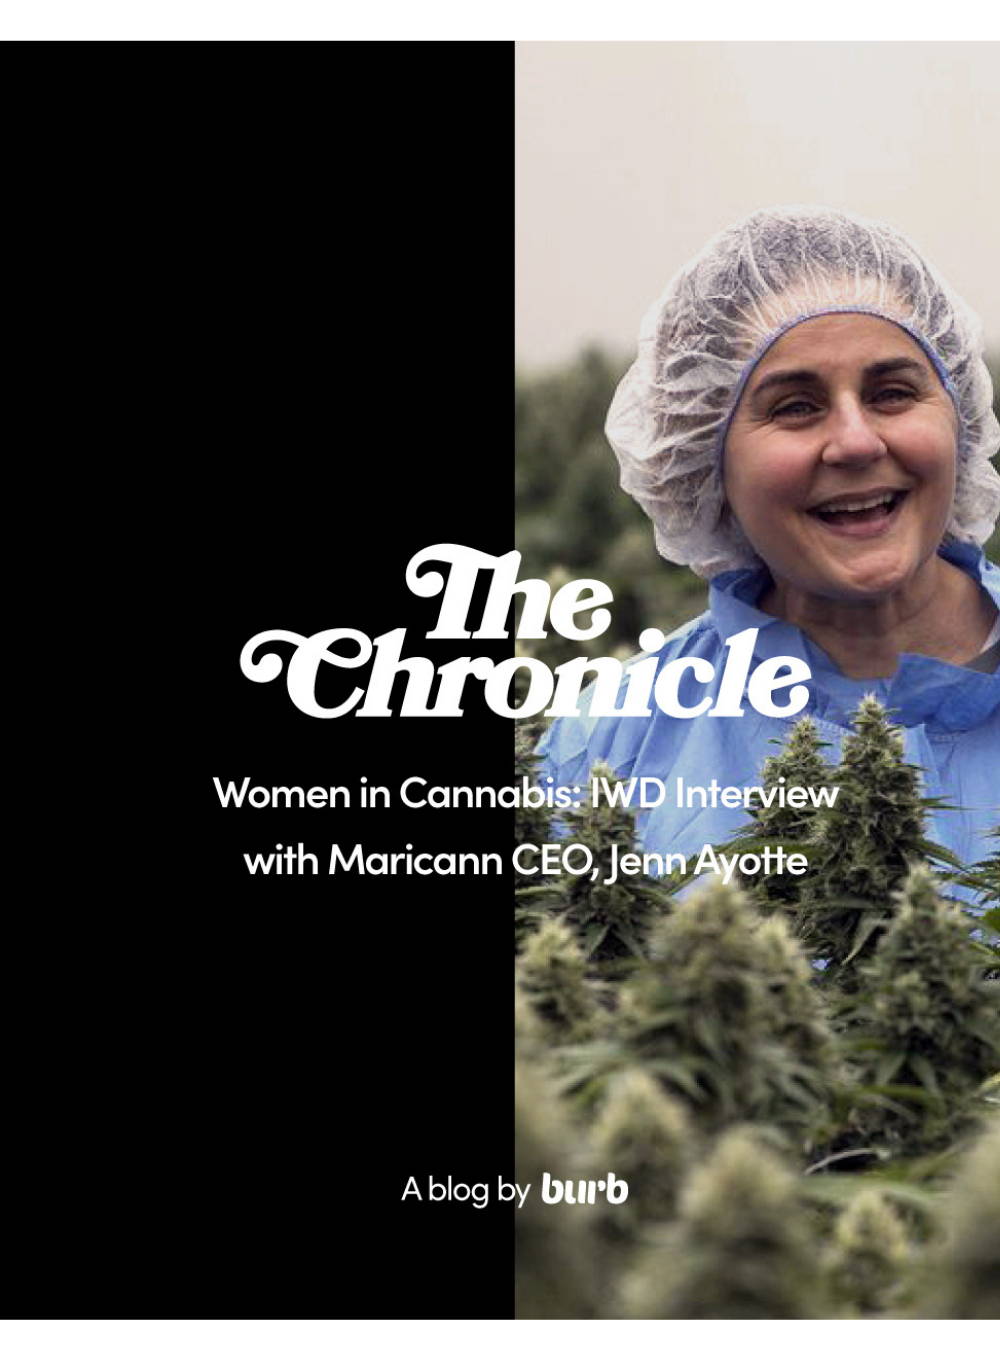 Women in Cannabis: IWD Interview with Maricann CEO, Jenn Ayotte